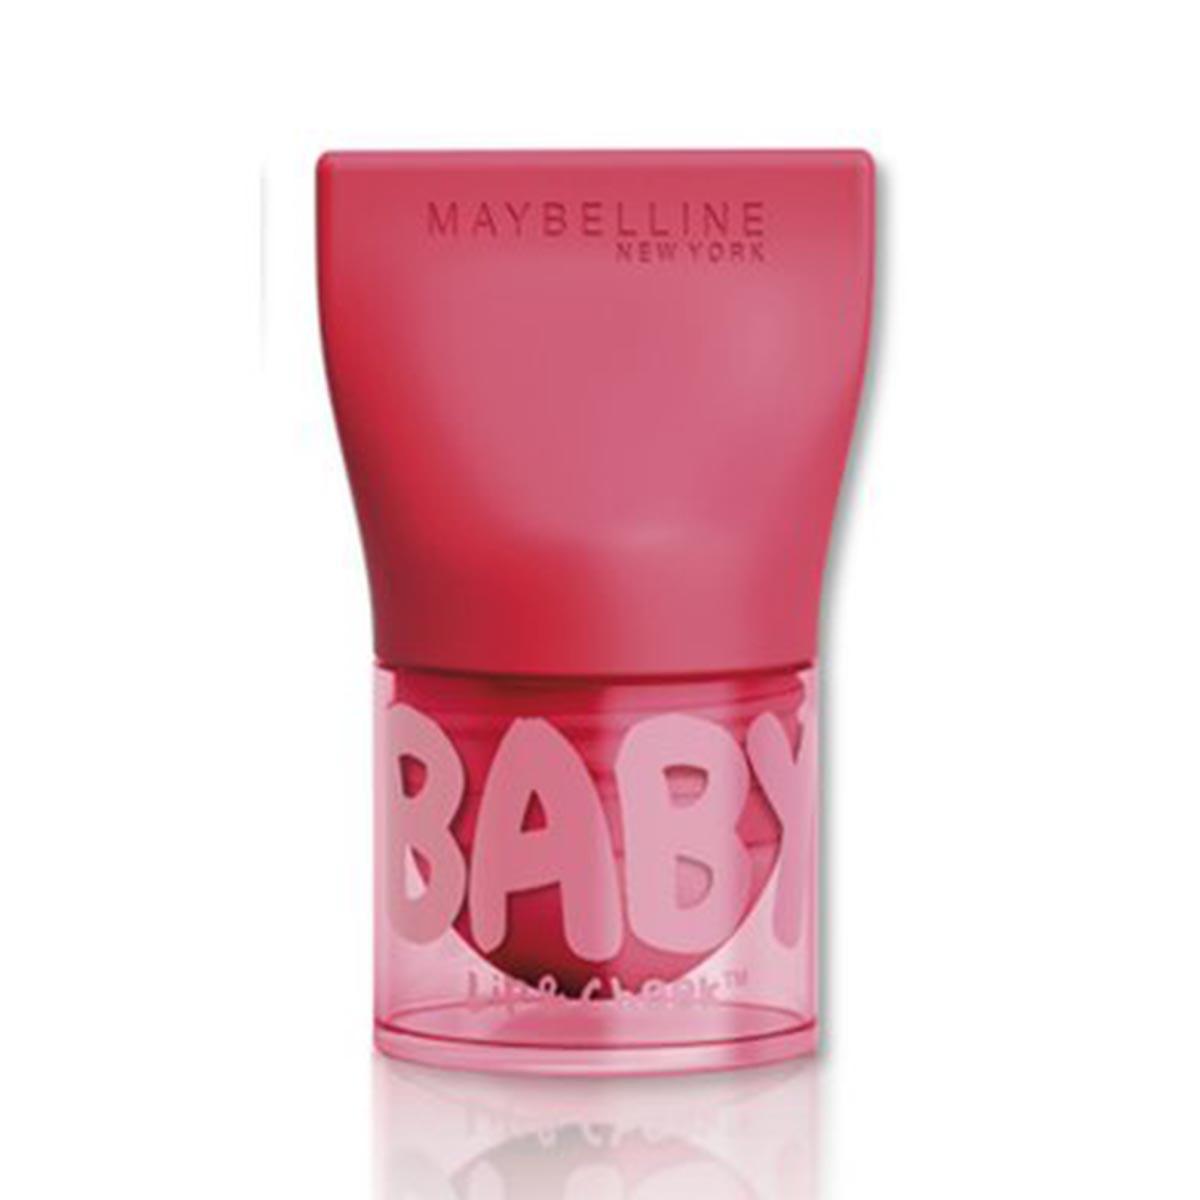 maybelline-baby-lip-cheek-booming-rub